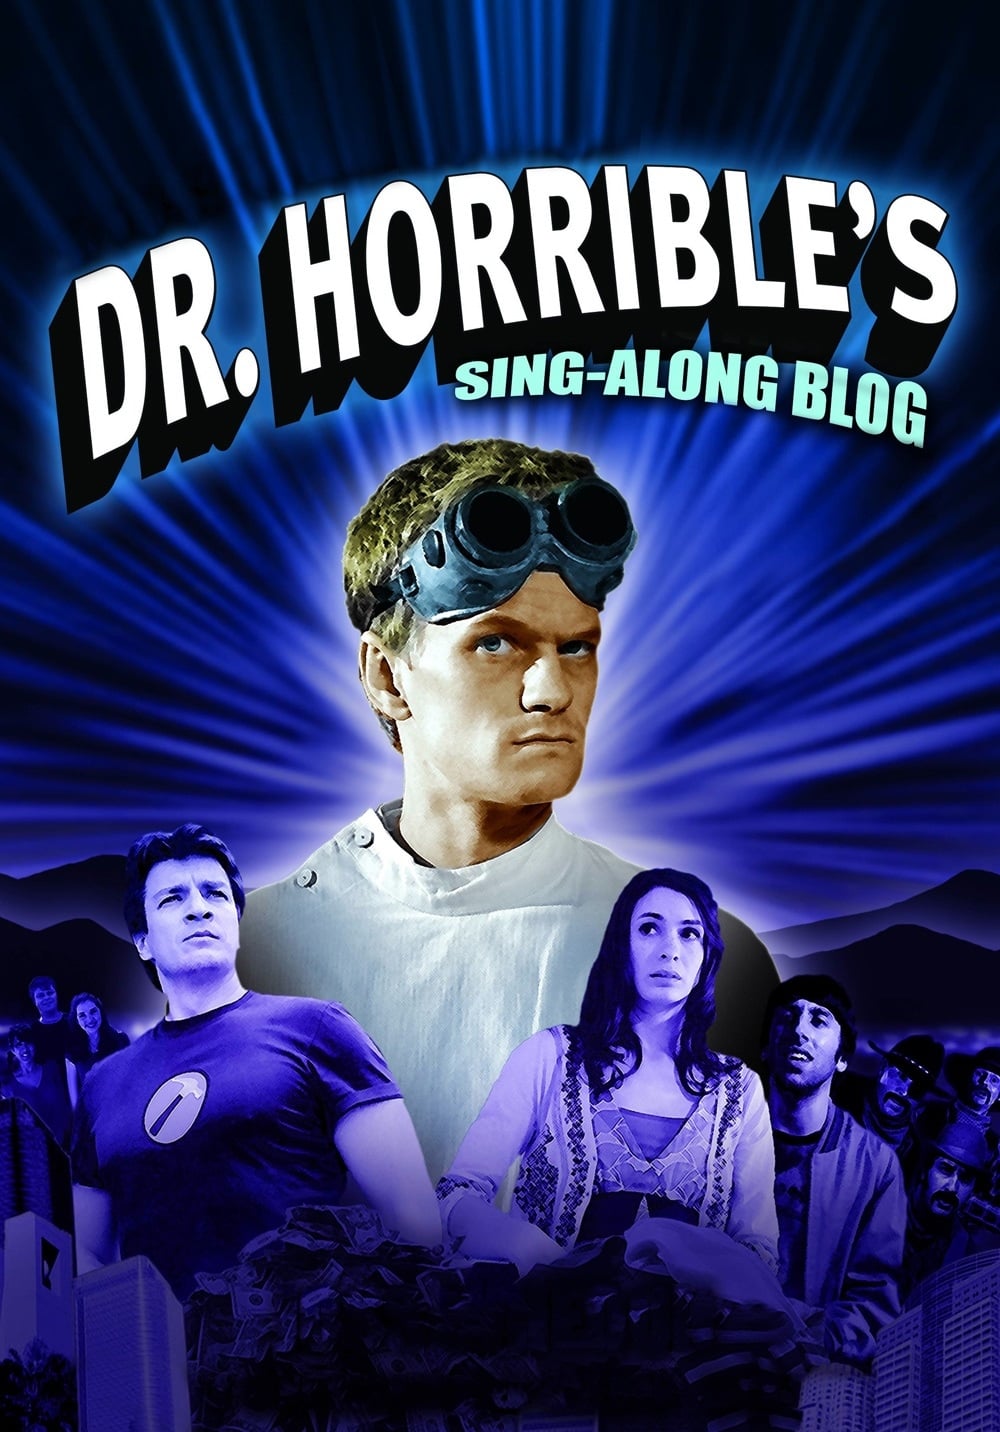 Dr. Horrible's Sing-Along Blog TV Shows About Villain